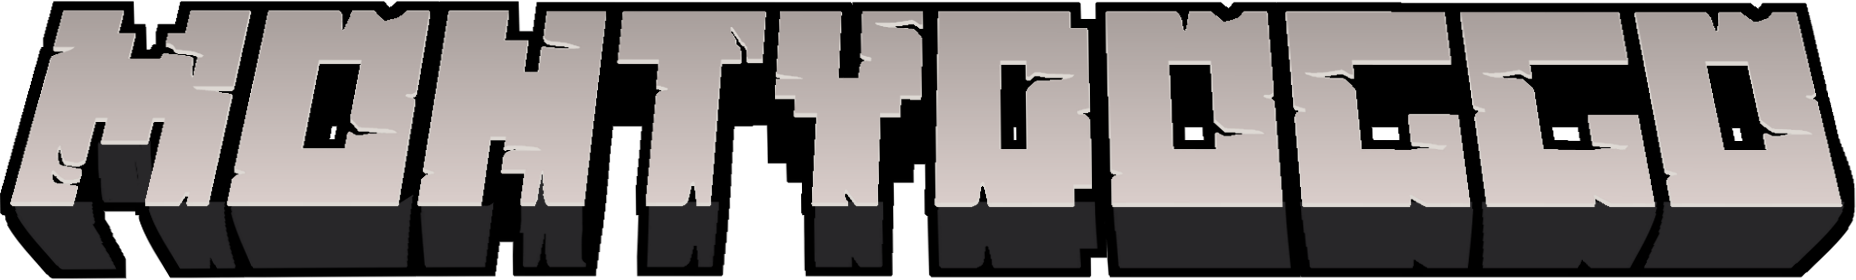 minecraft bedrock edition logo png